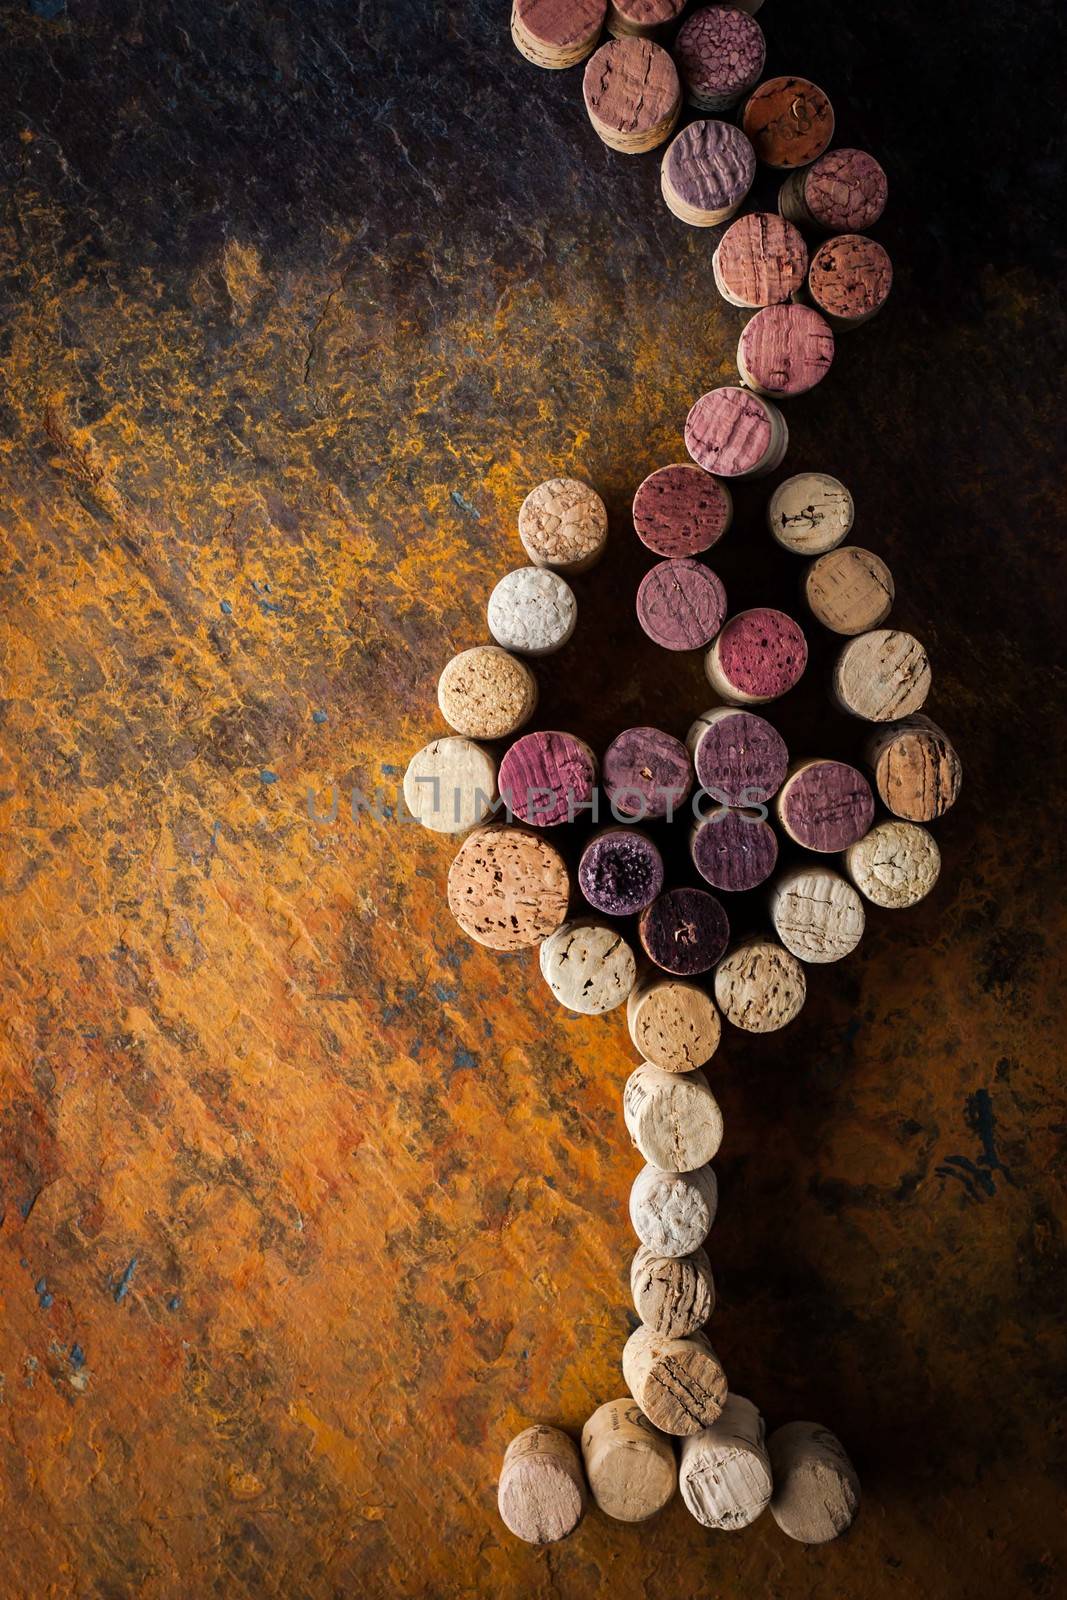 Glass of wine made by cork by Deniskarpenkov